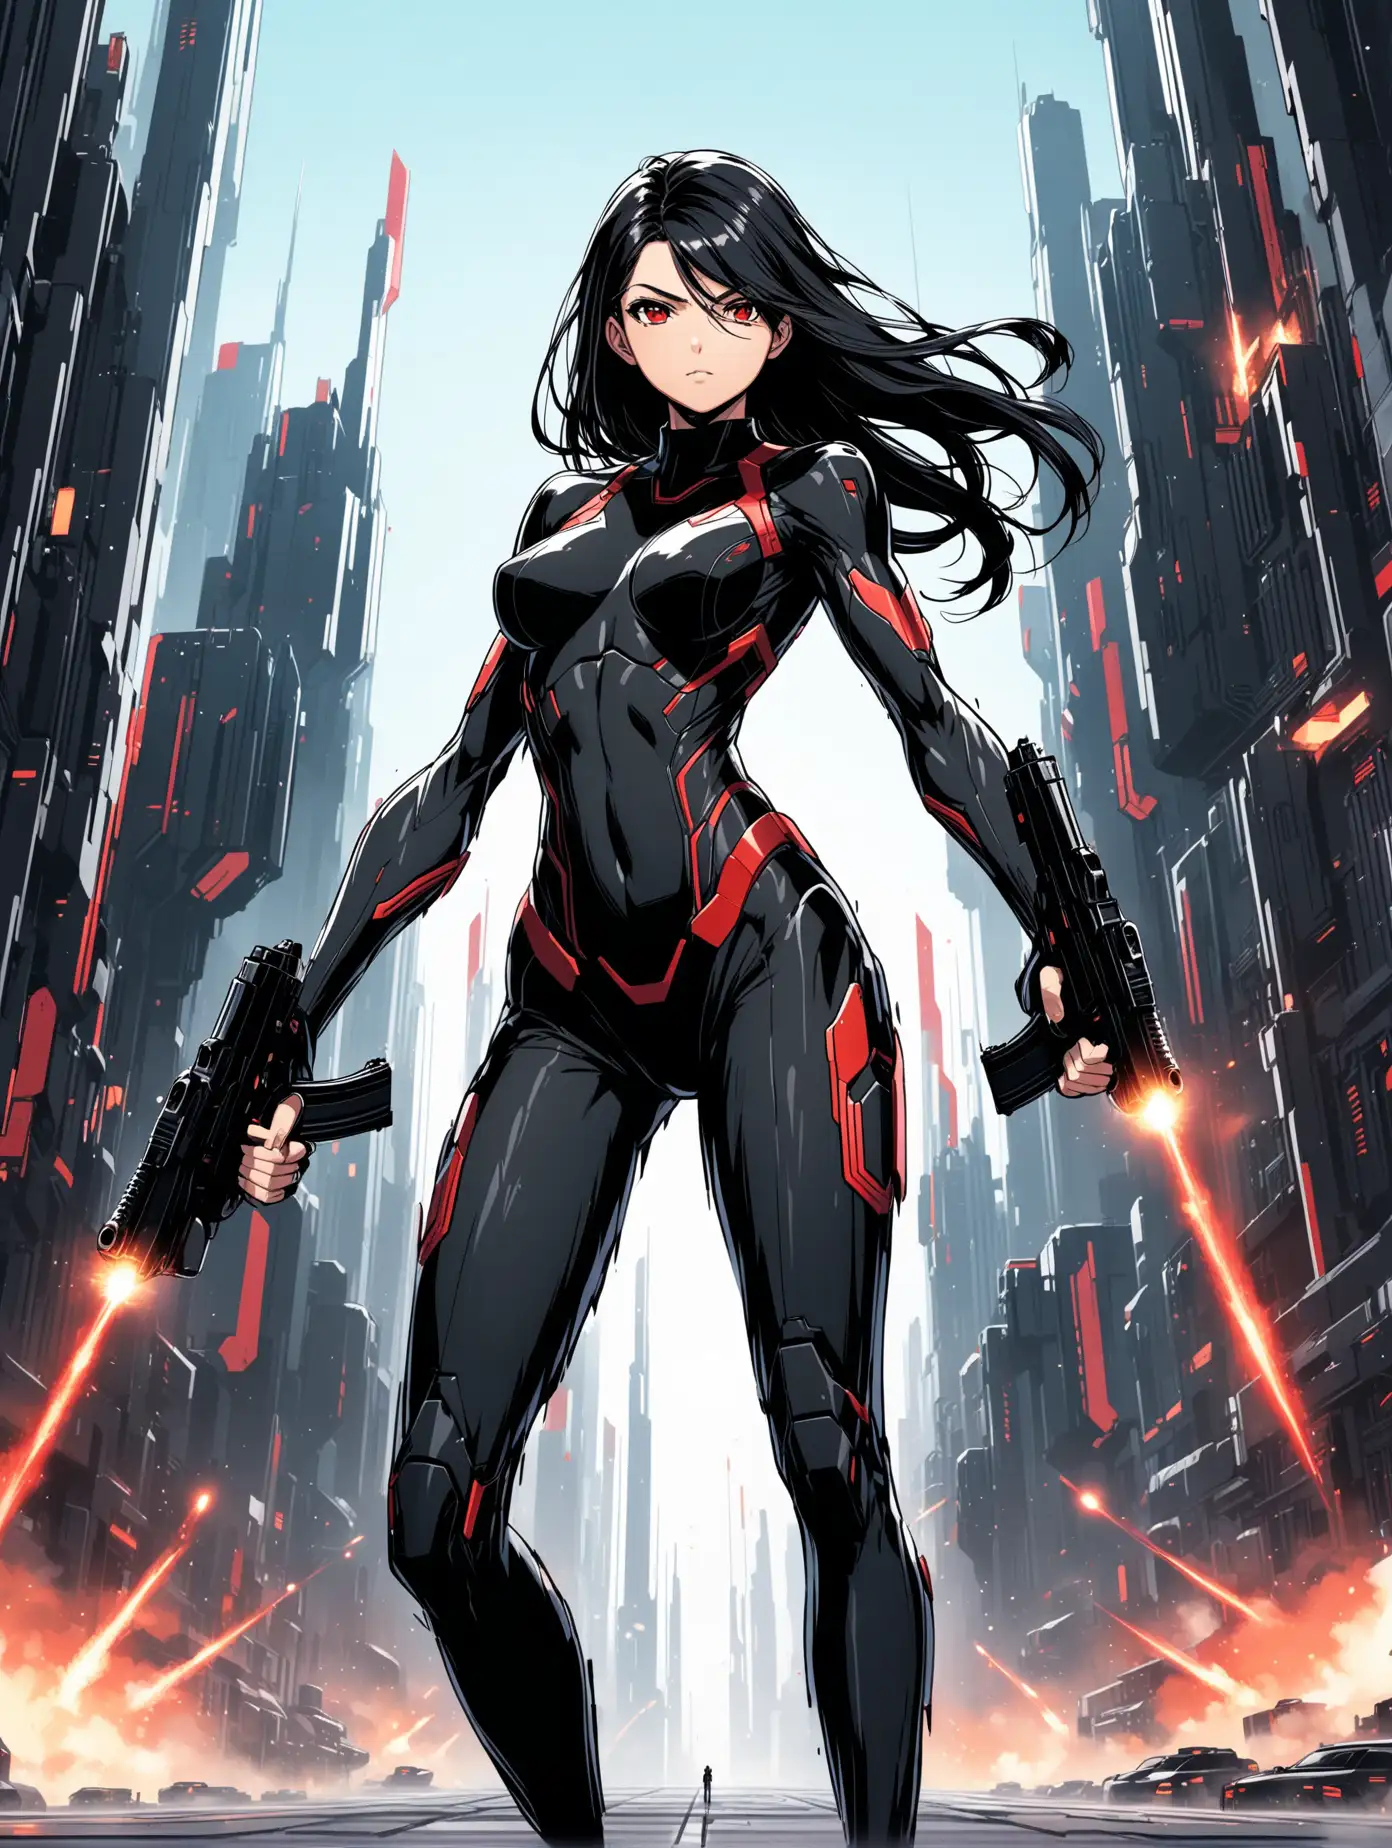 Futuristic Heroine Bold Gunslinger in Sleek Black Armor